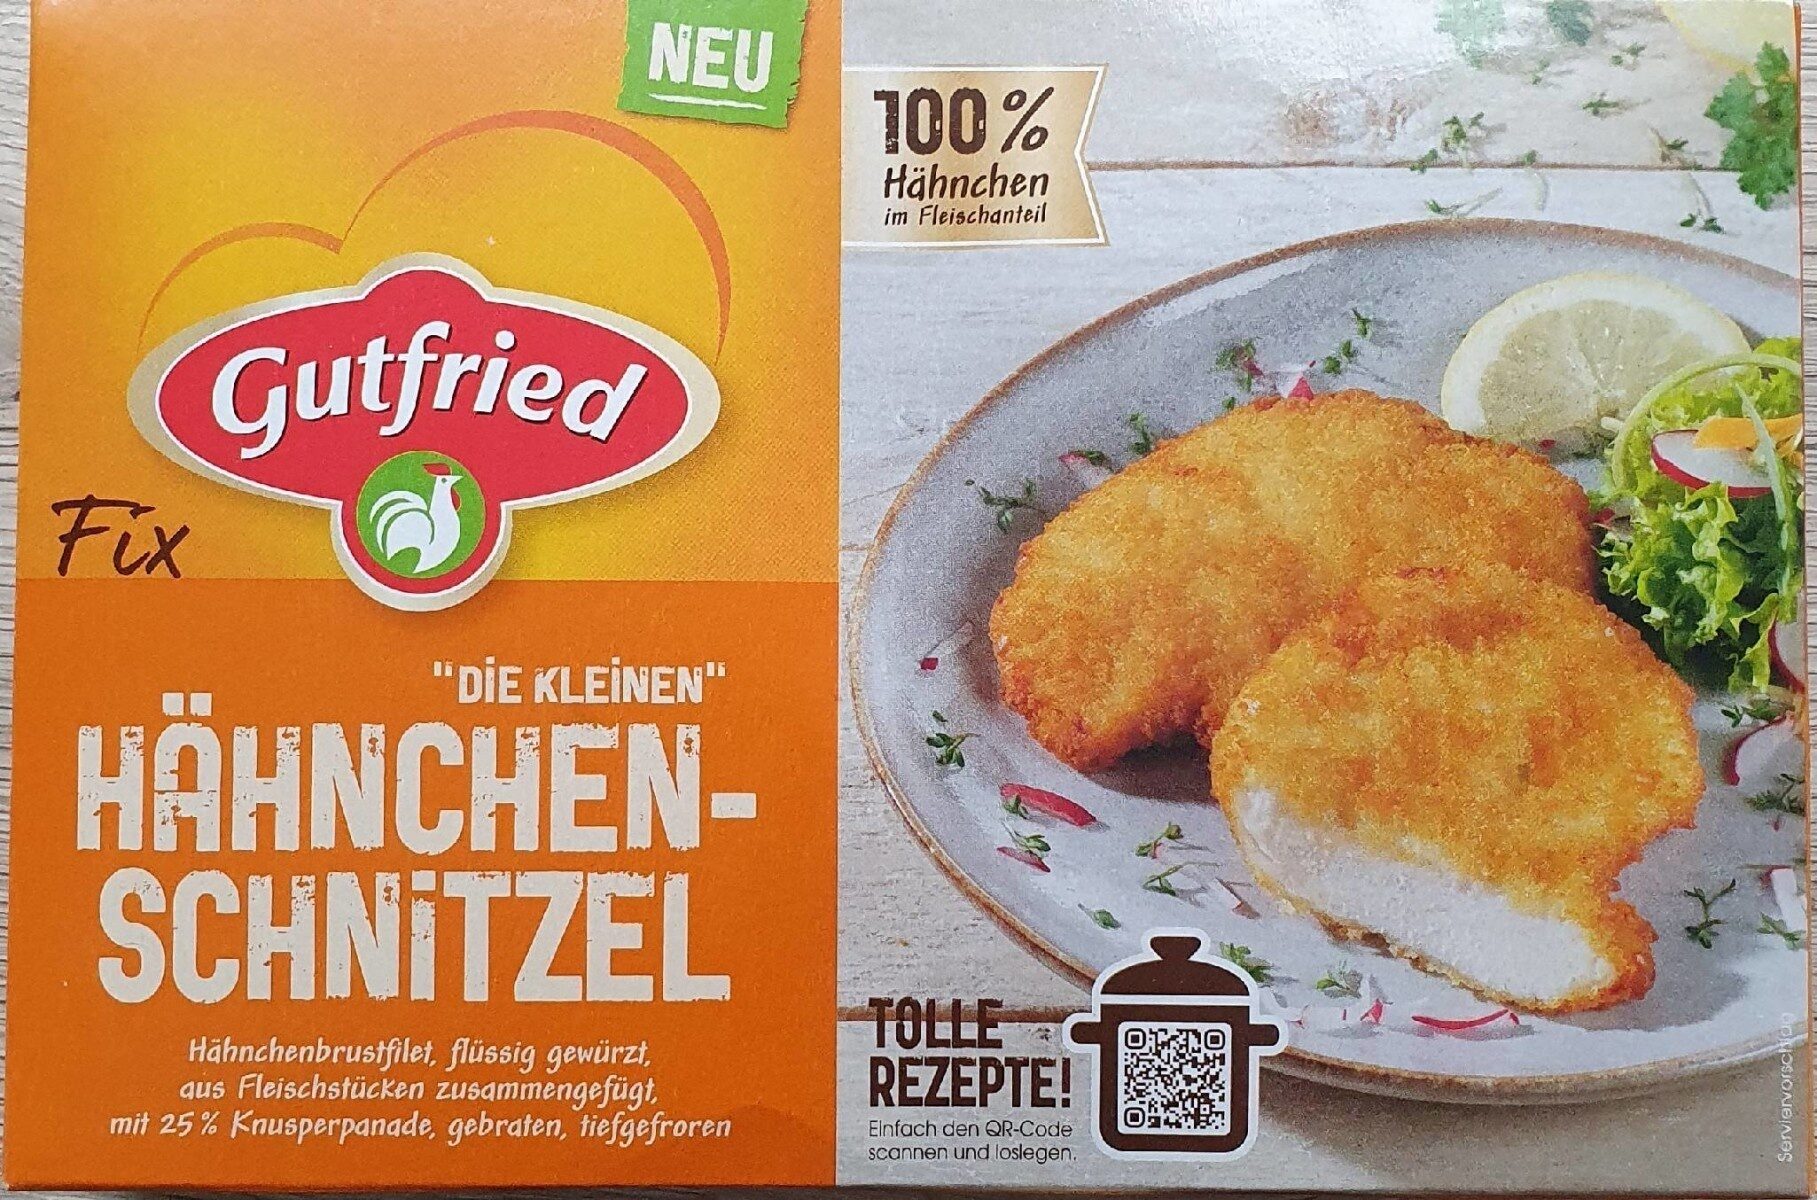 Hähnchen-Schnitzel - Produkt